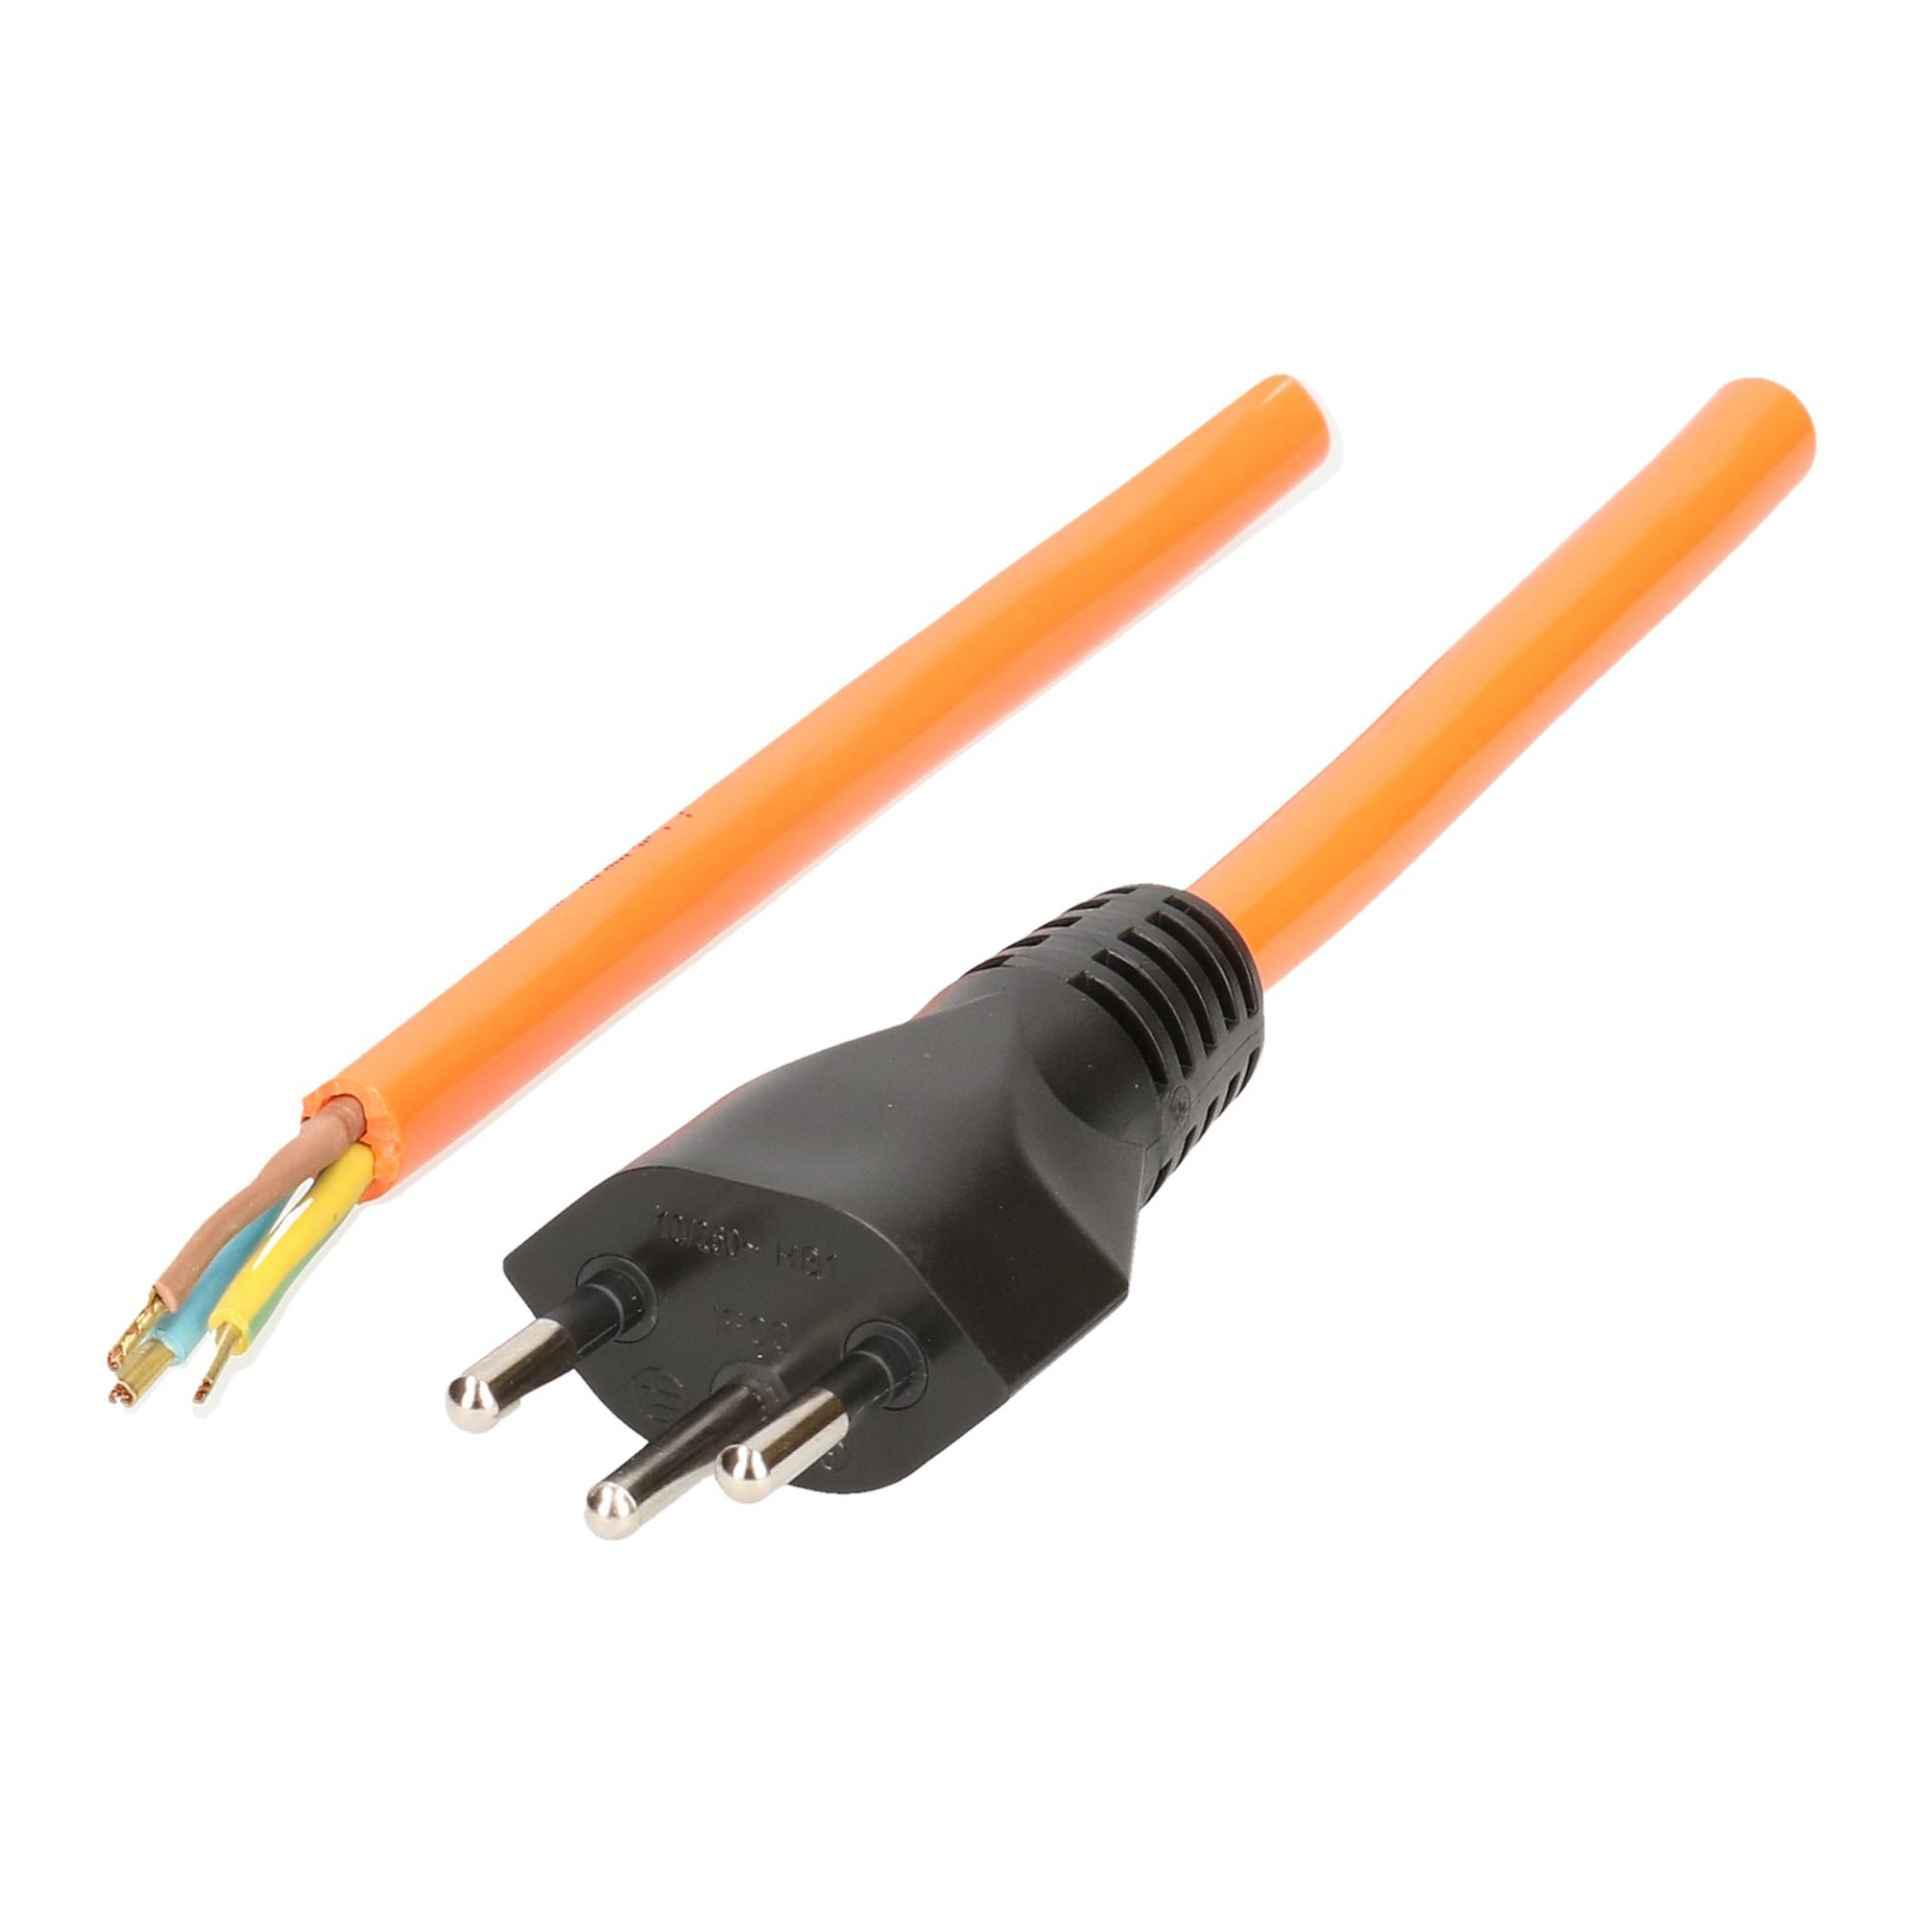 EPR/PUR-Netzkabel H07BQ-F3G1.5 5m orange T12